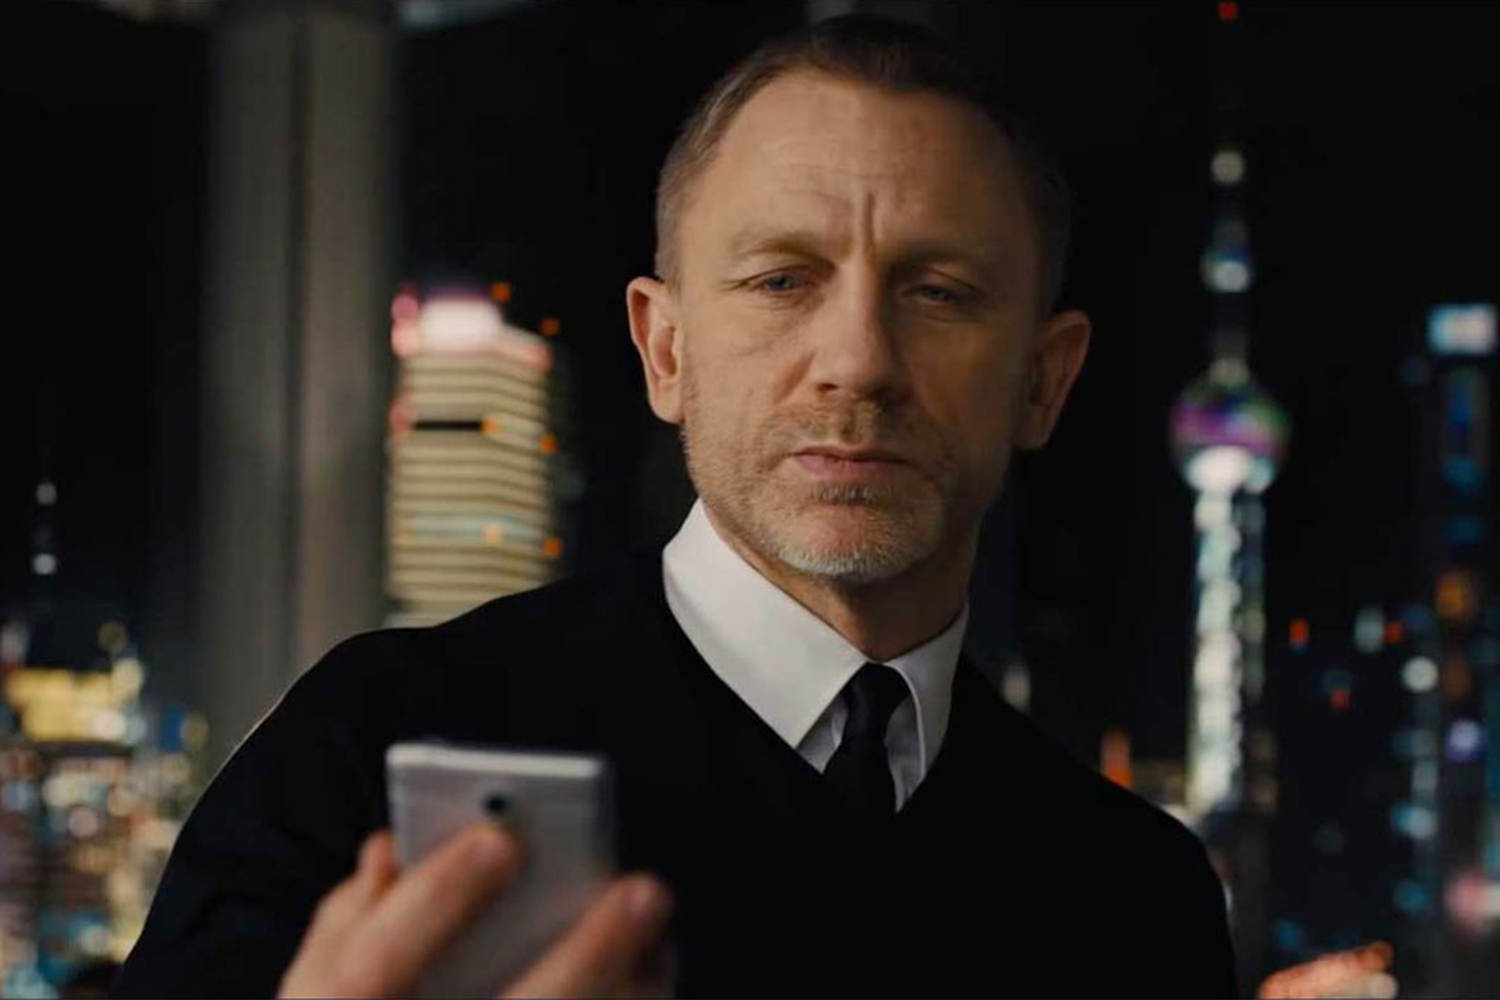 Daniel Craig as James Bond looking at a phone in 2012's "Skyfall"